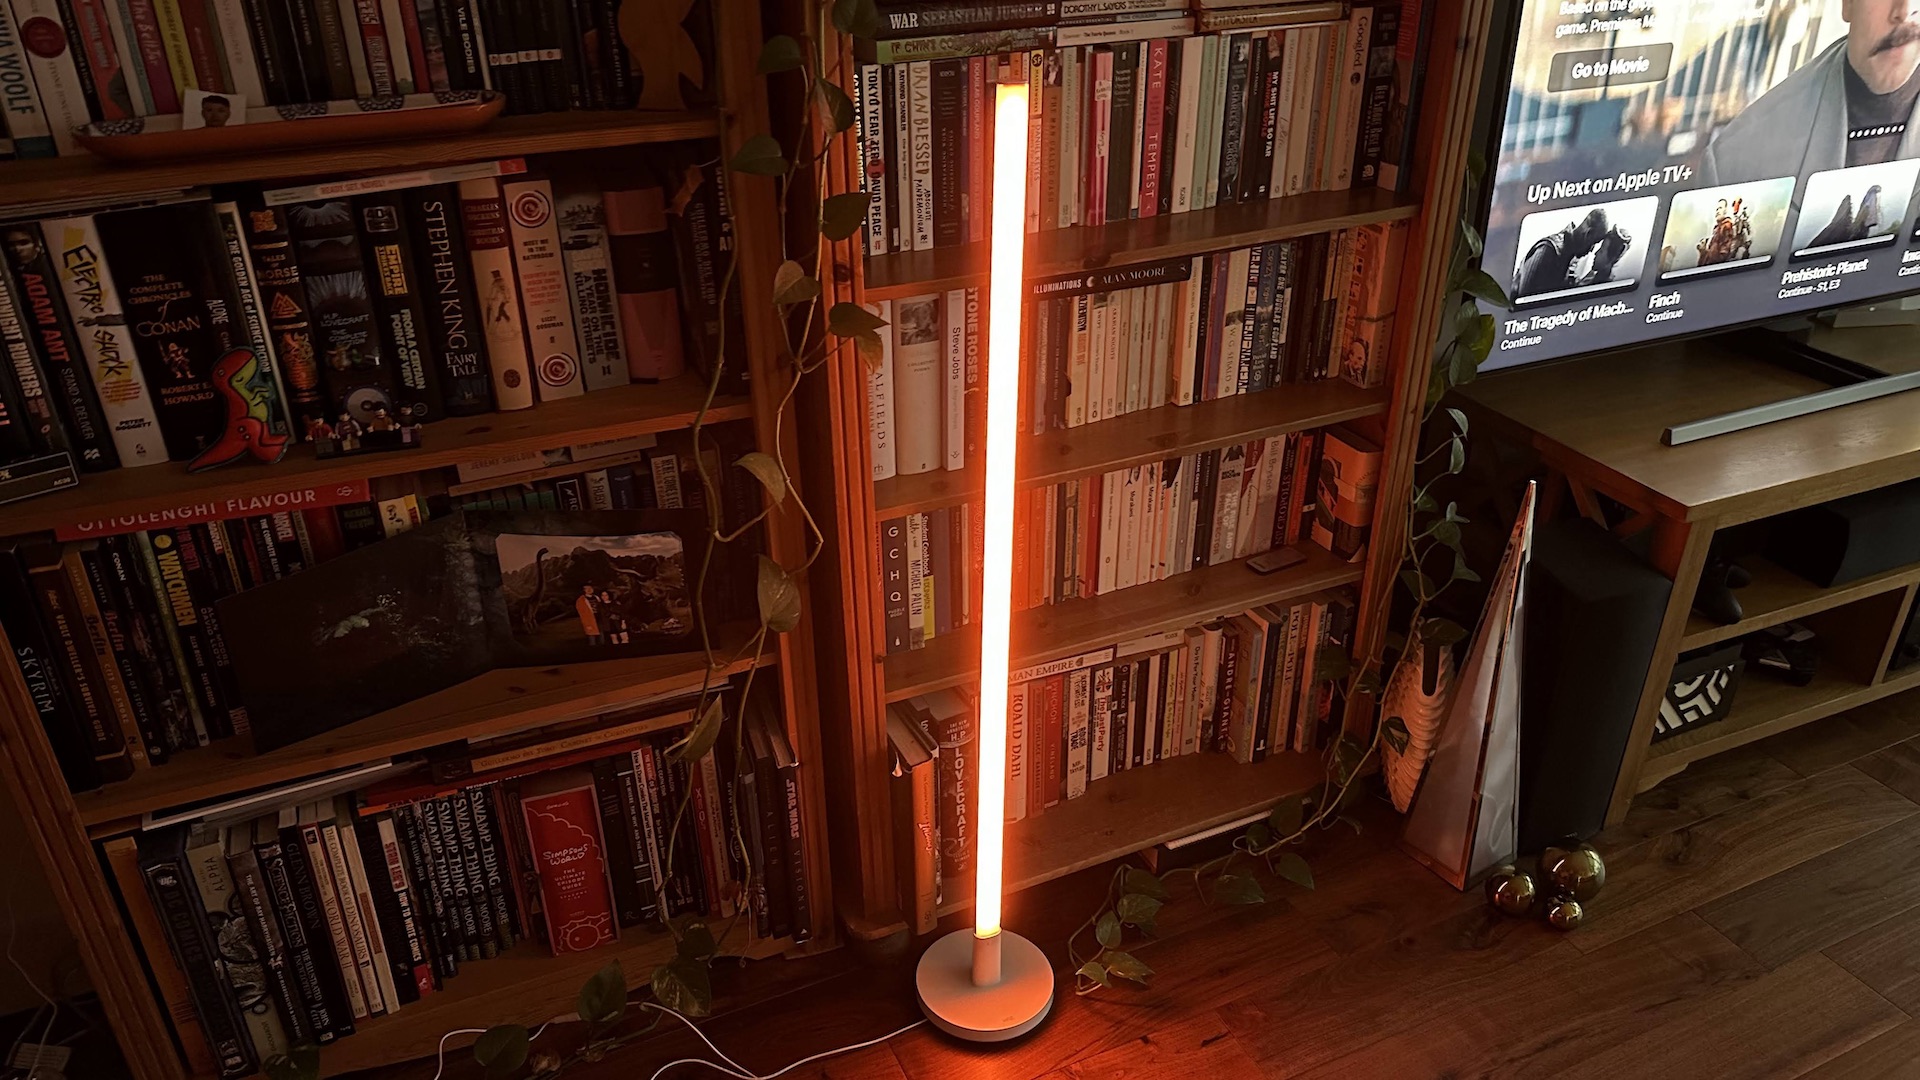 Wiz Luminaire Pole Floor Light orange brillant dans un coin salon.